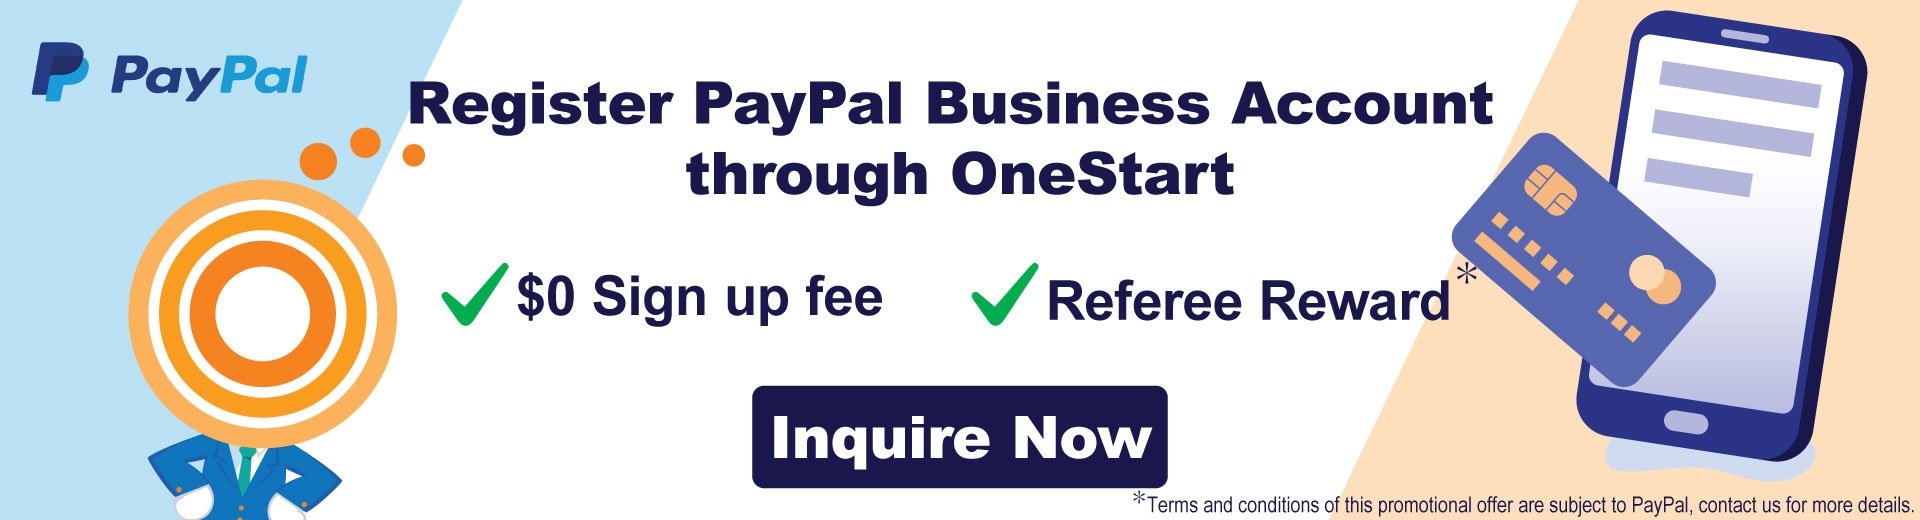 OneStart x PayPal Referral Program HK$300 reward